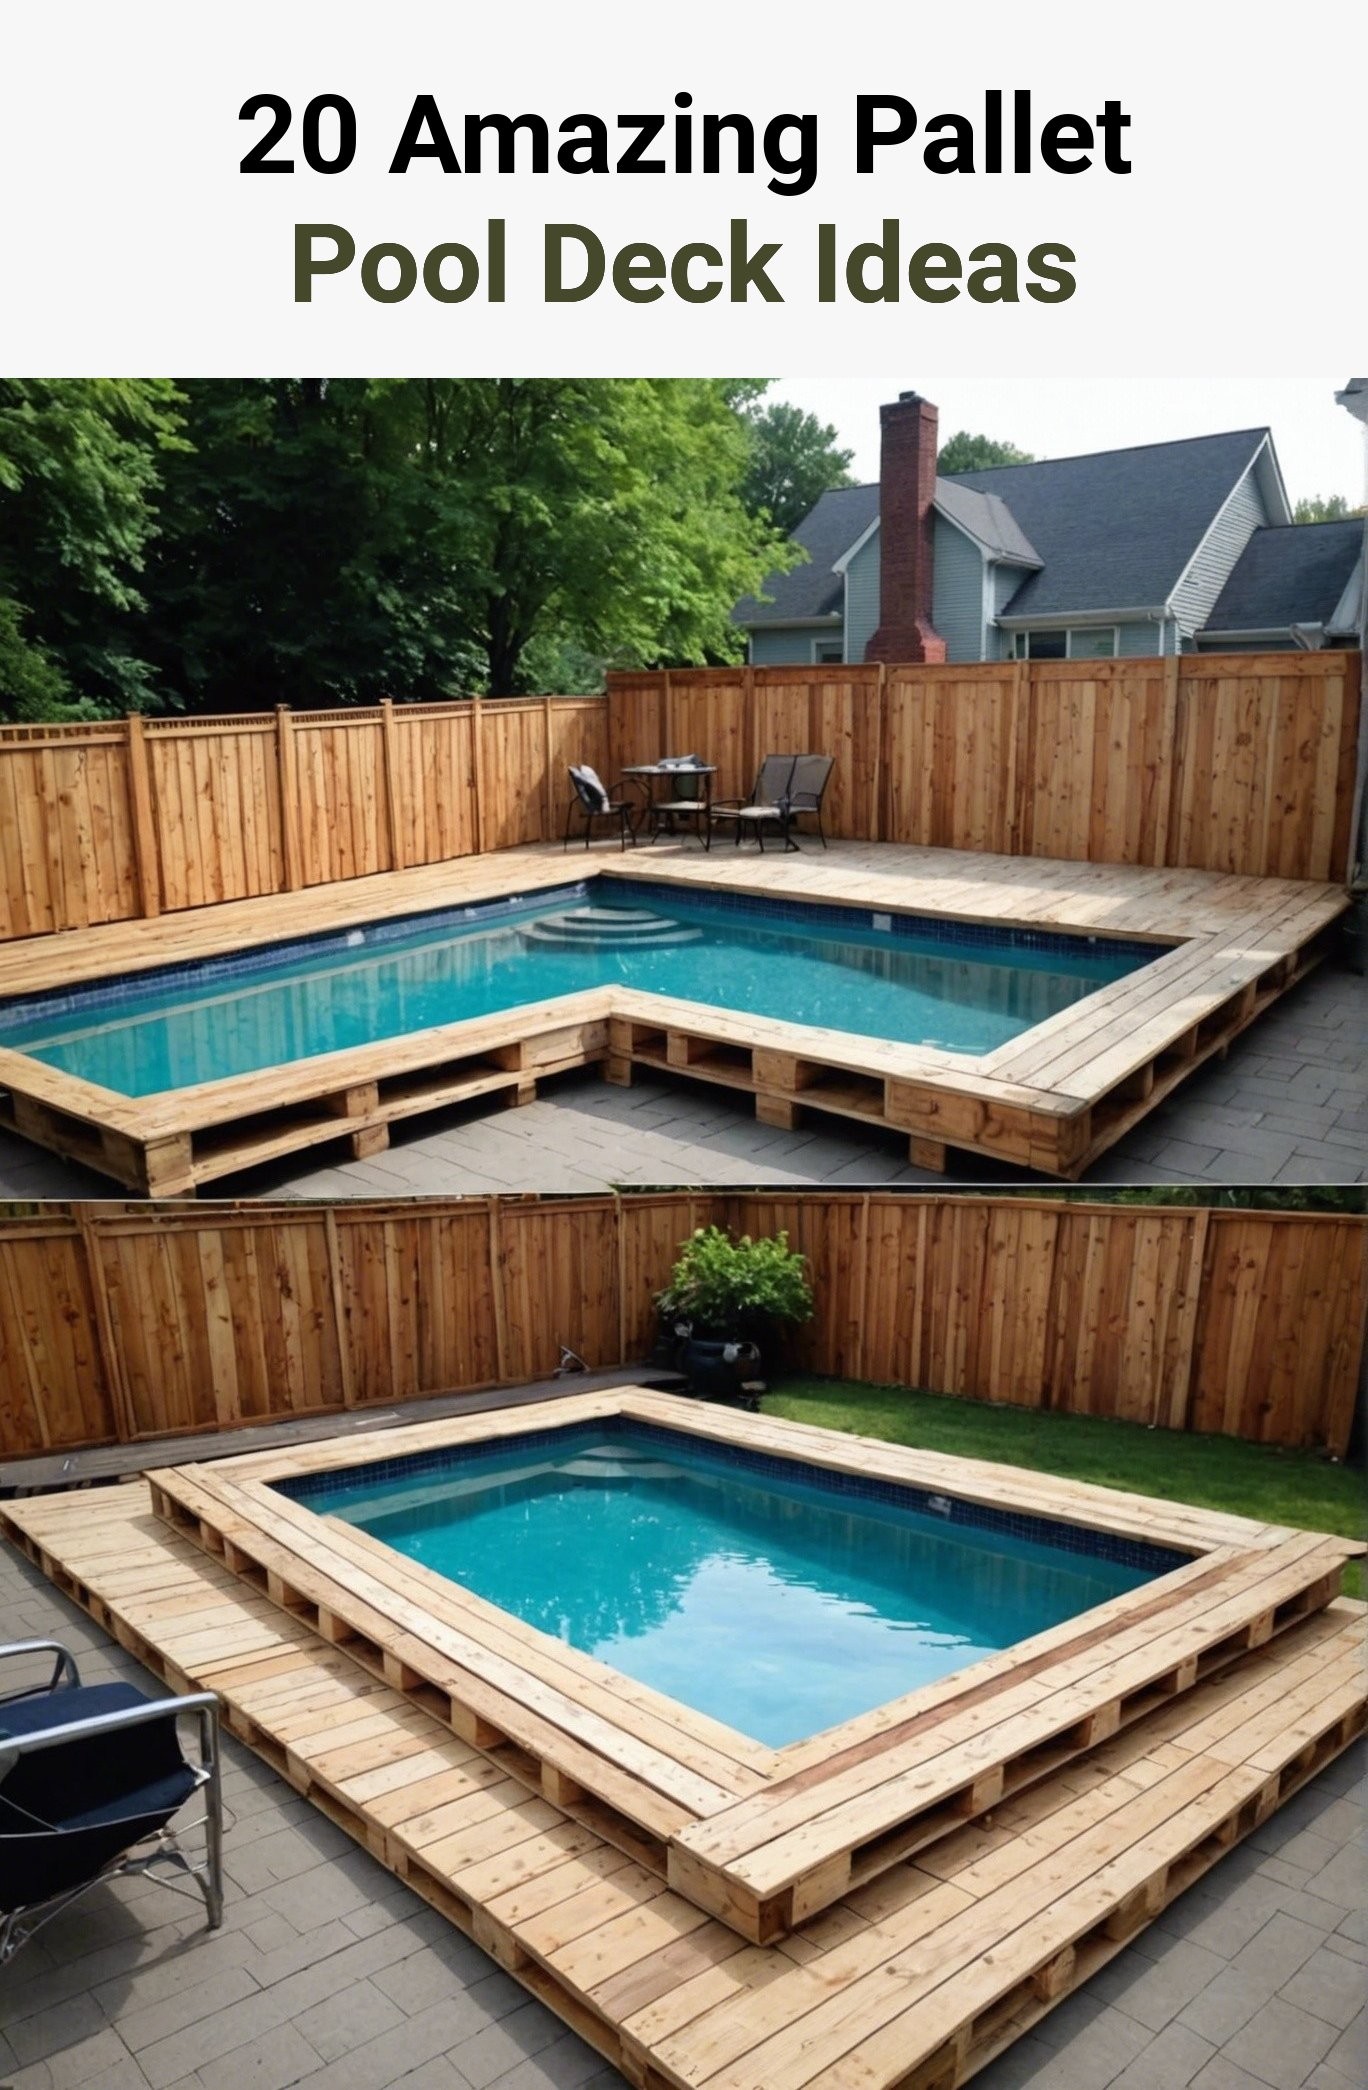 20 Amazing Pallet Pool Deck Ideas